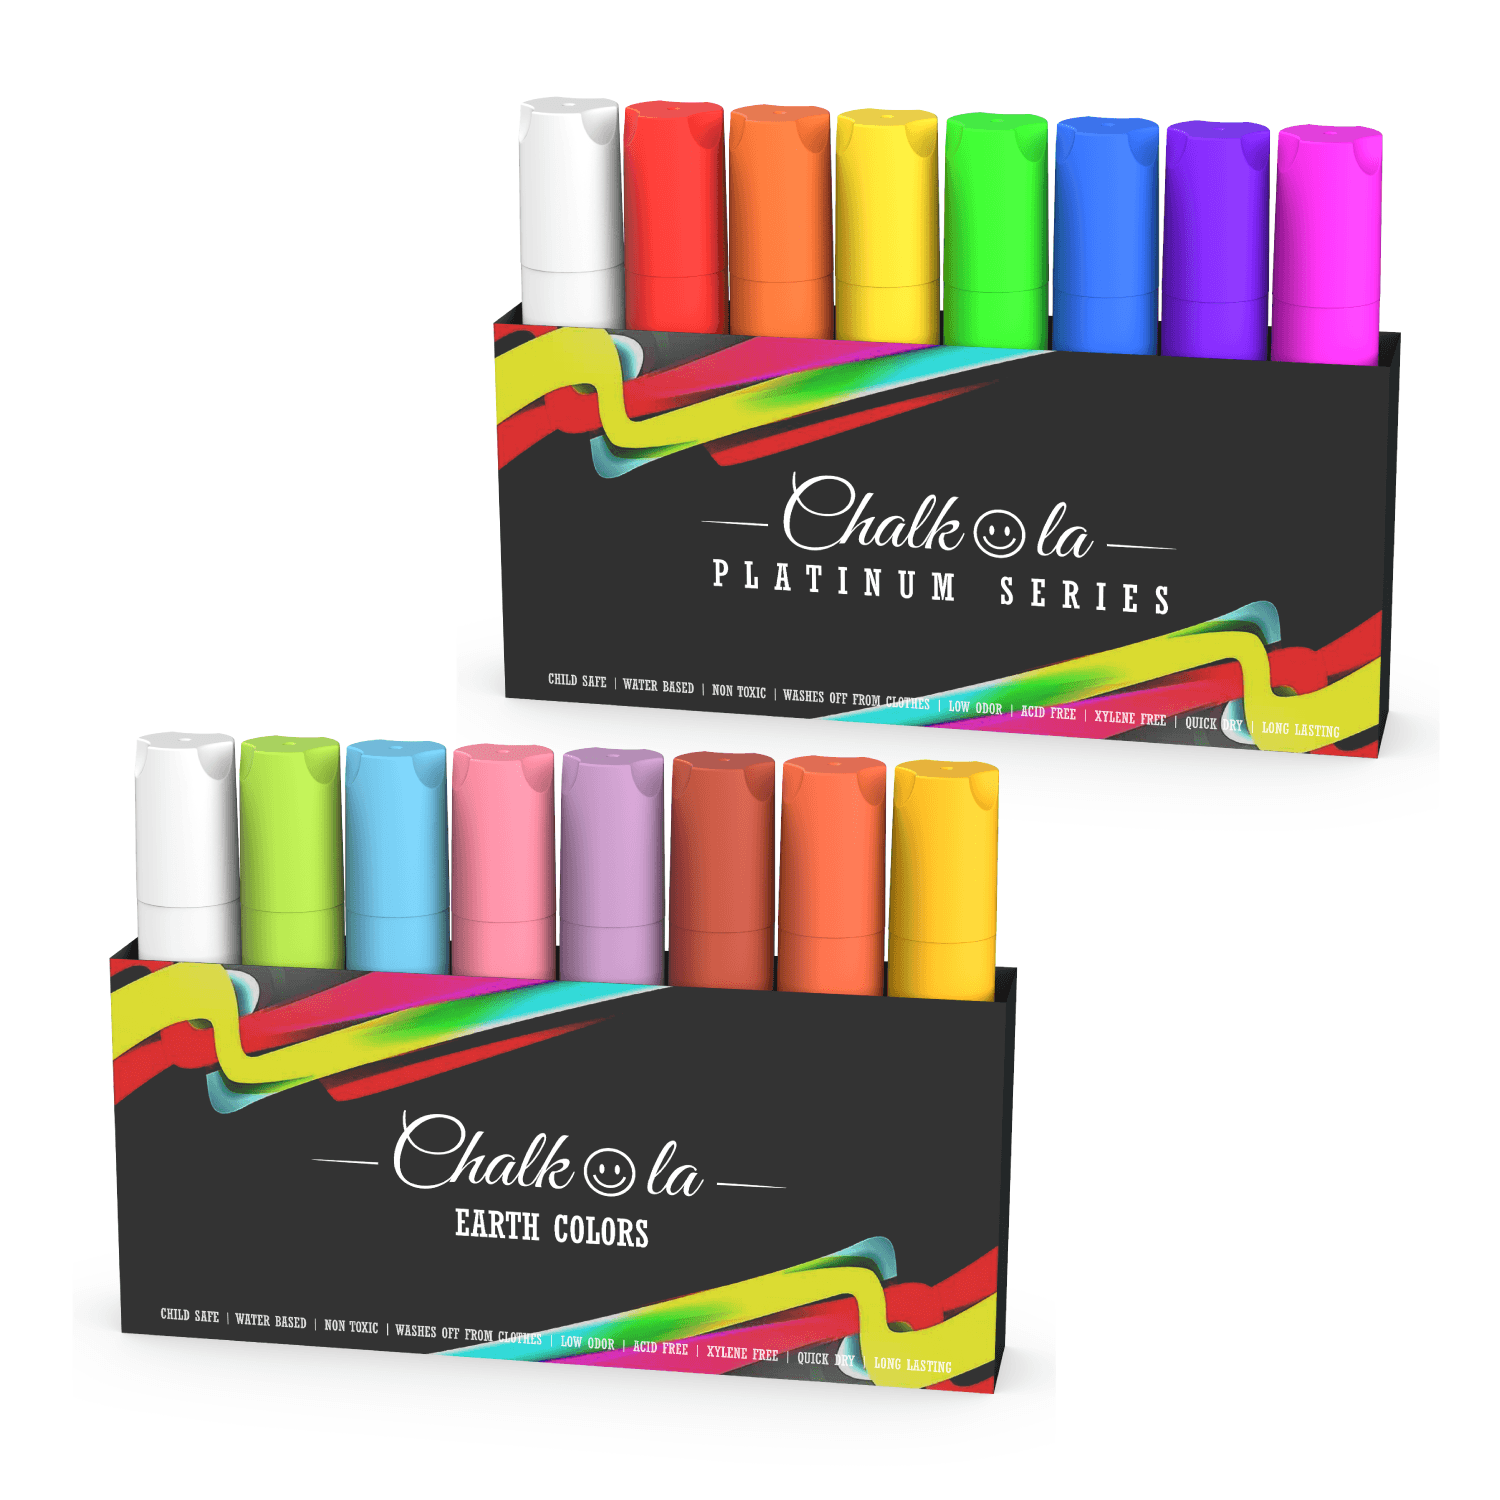 Fun Acrylic Paint Marker Applications - Chalkola - Chalkola Art Supply